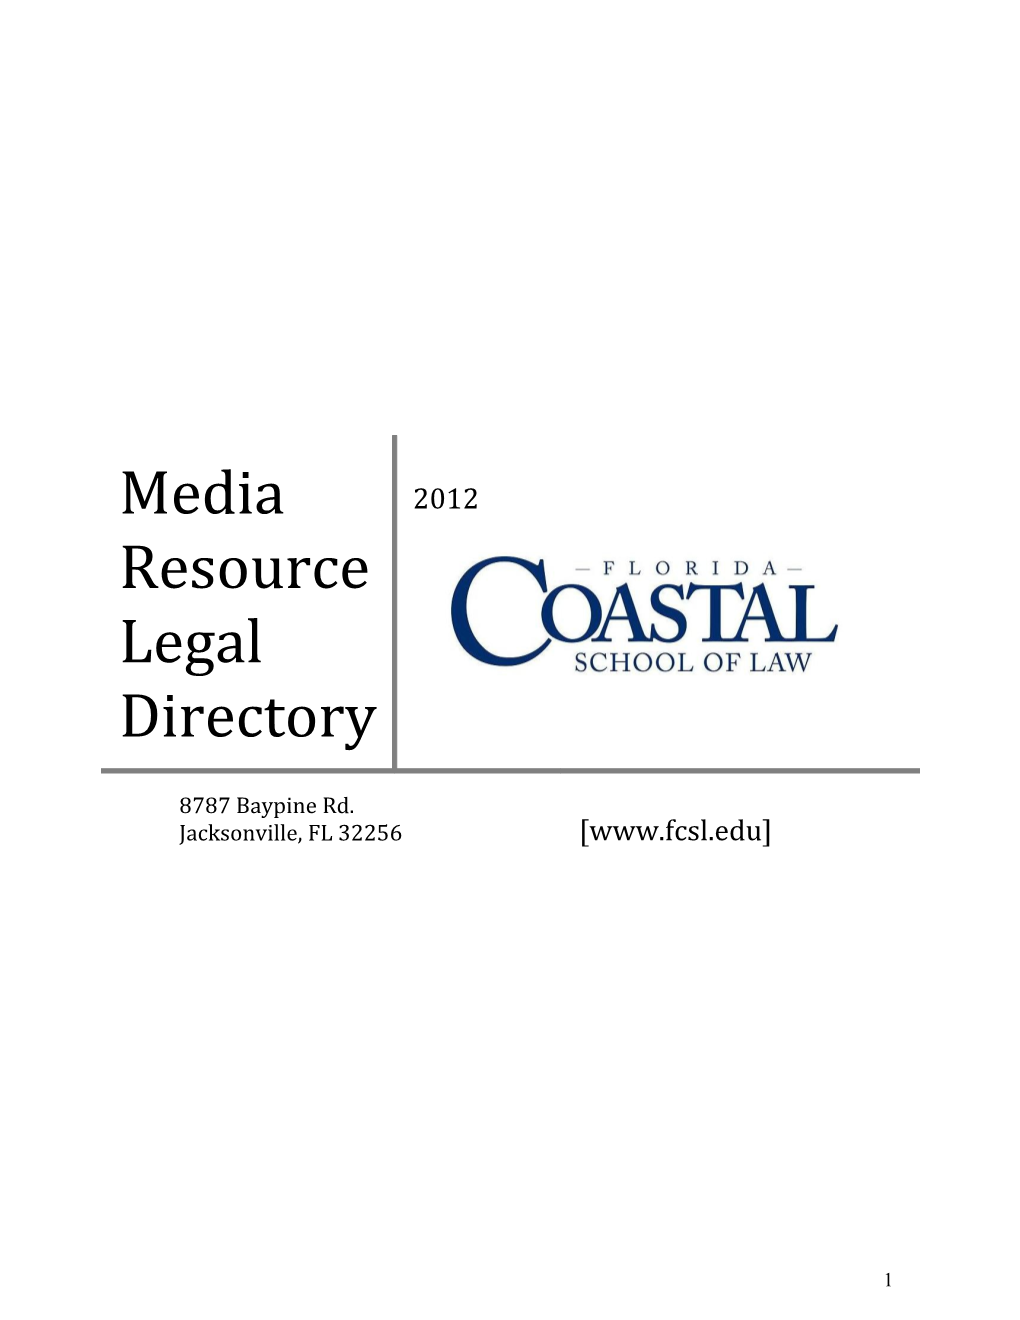 Media Resource Legal Directory